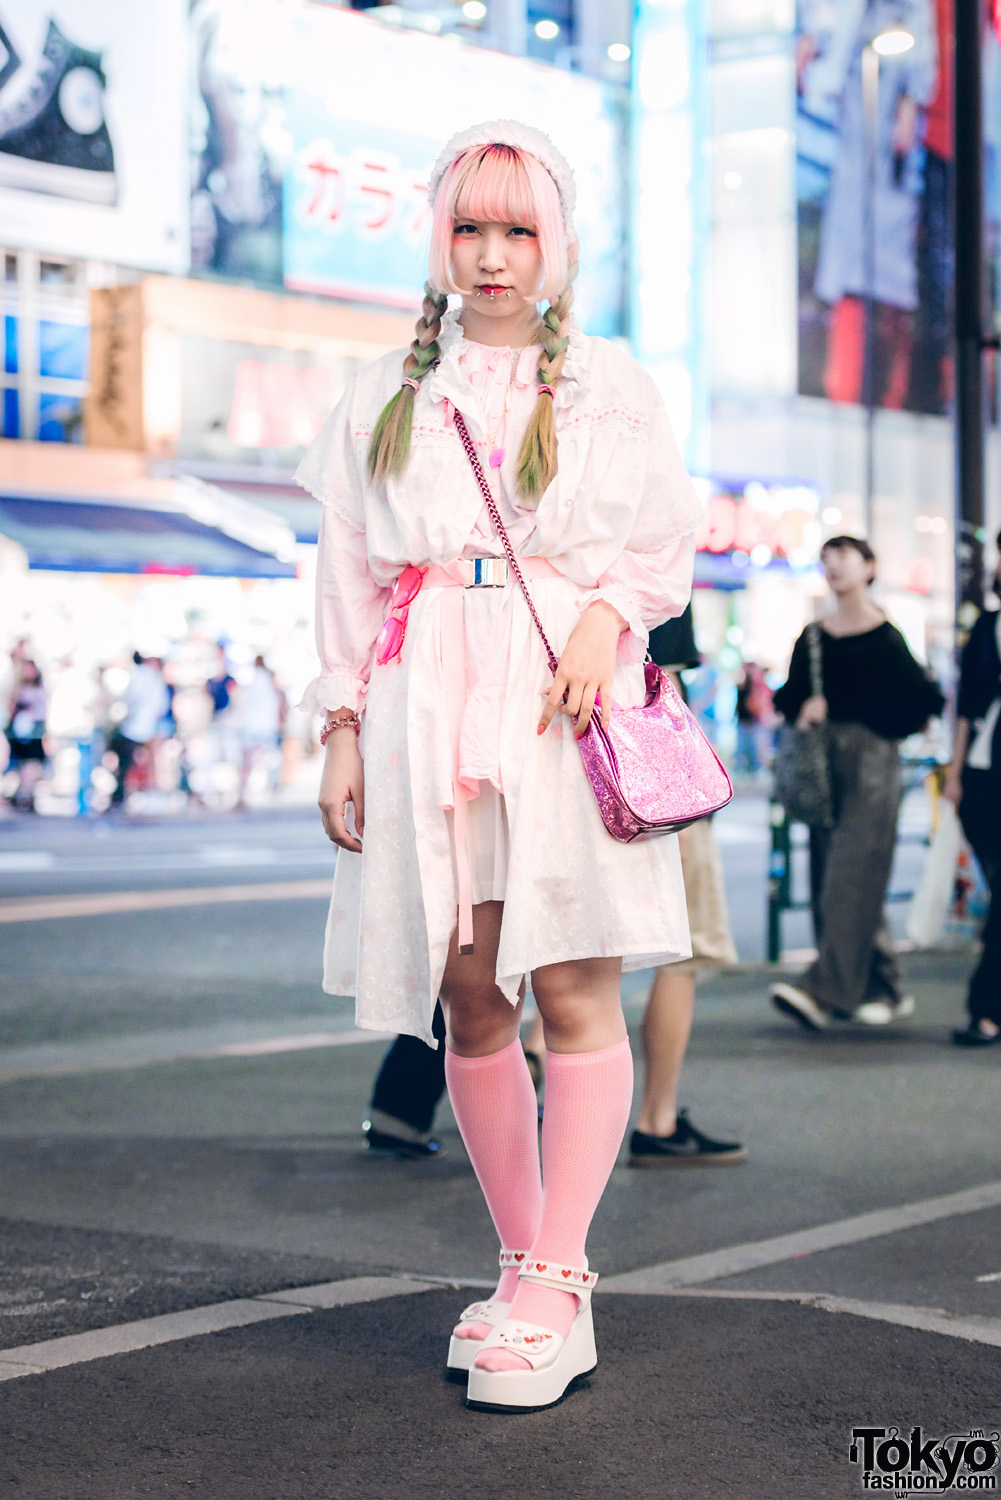 Harajuku Girl in Cute Pink Fashion Style w/ Kinji, Spinns & Disney Glitter Bag